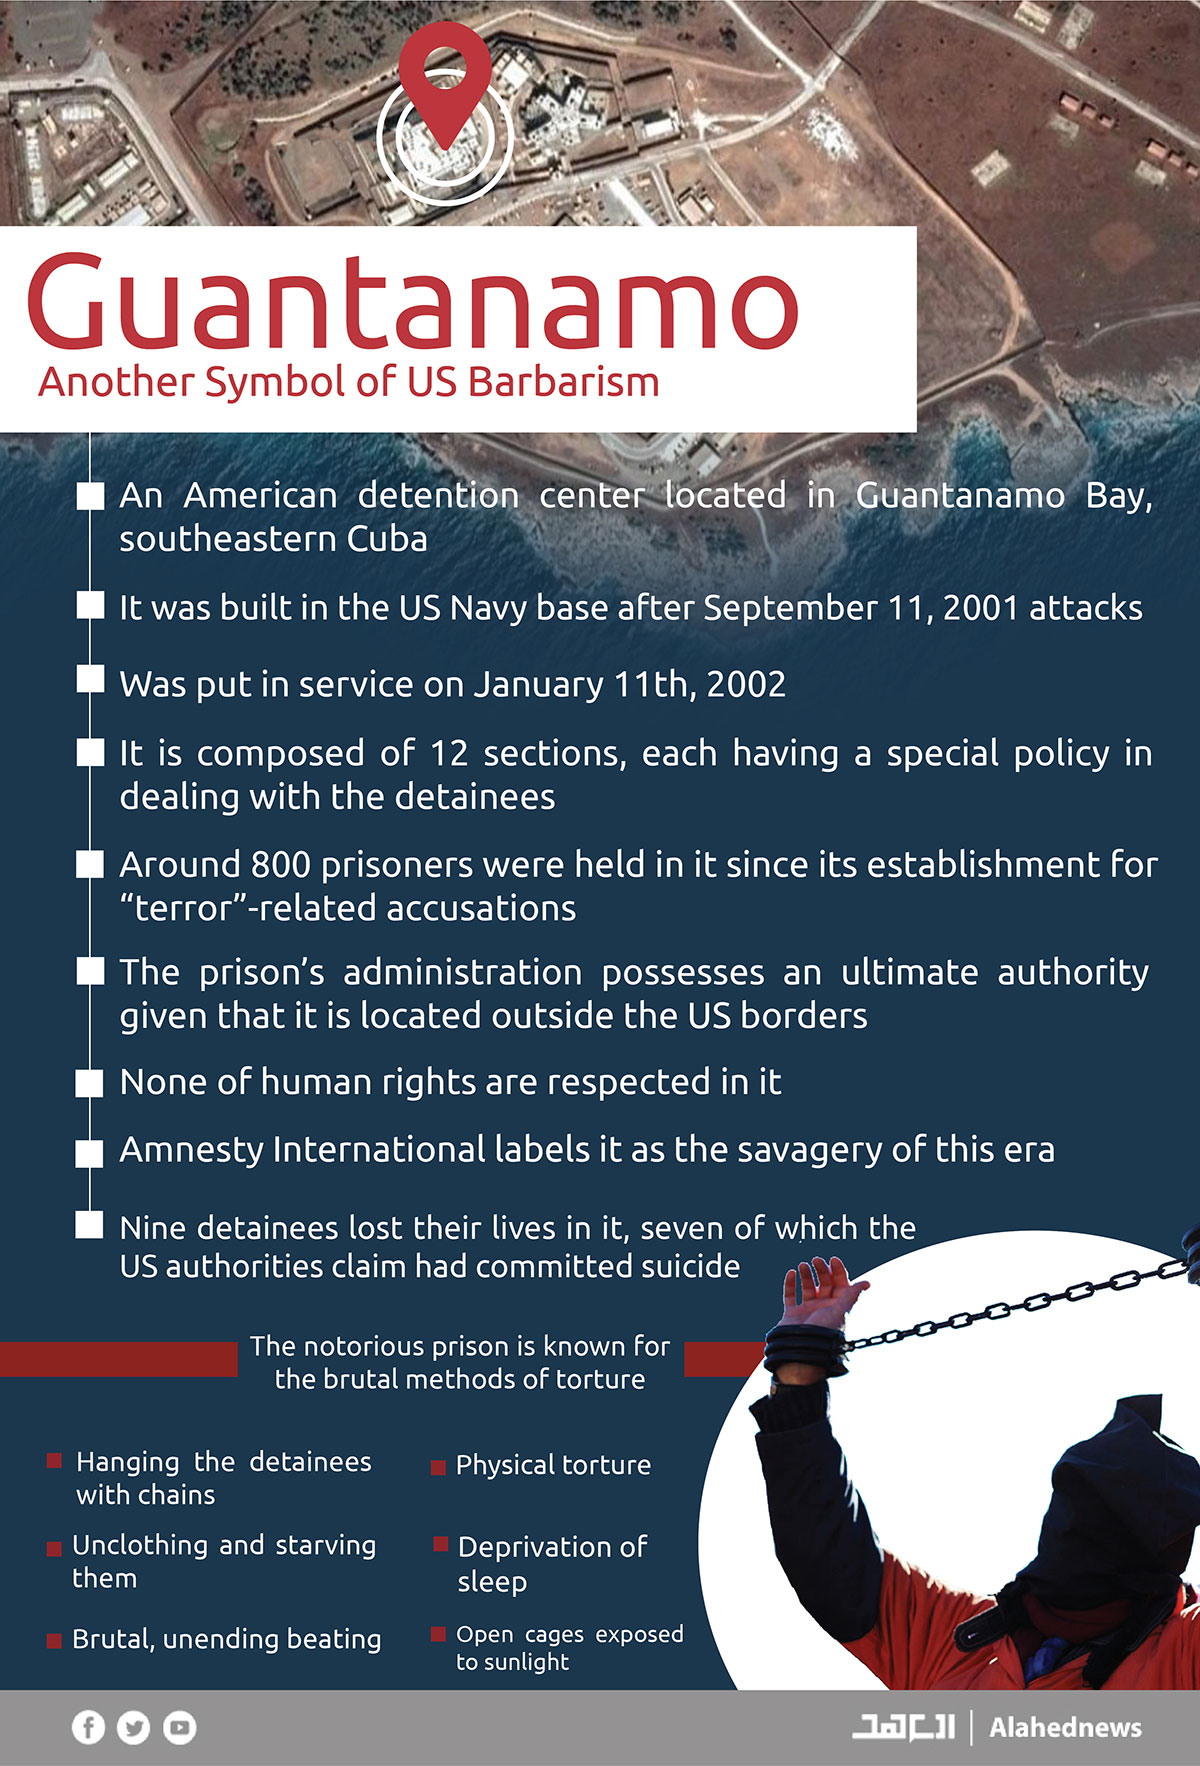 Guantanamo Bay Prison: Another Symbol of US’ Barbarism